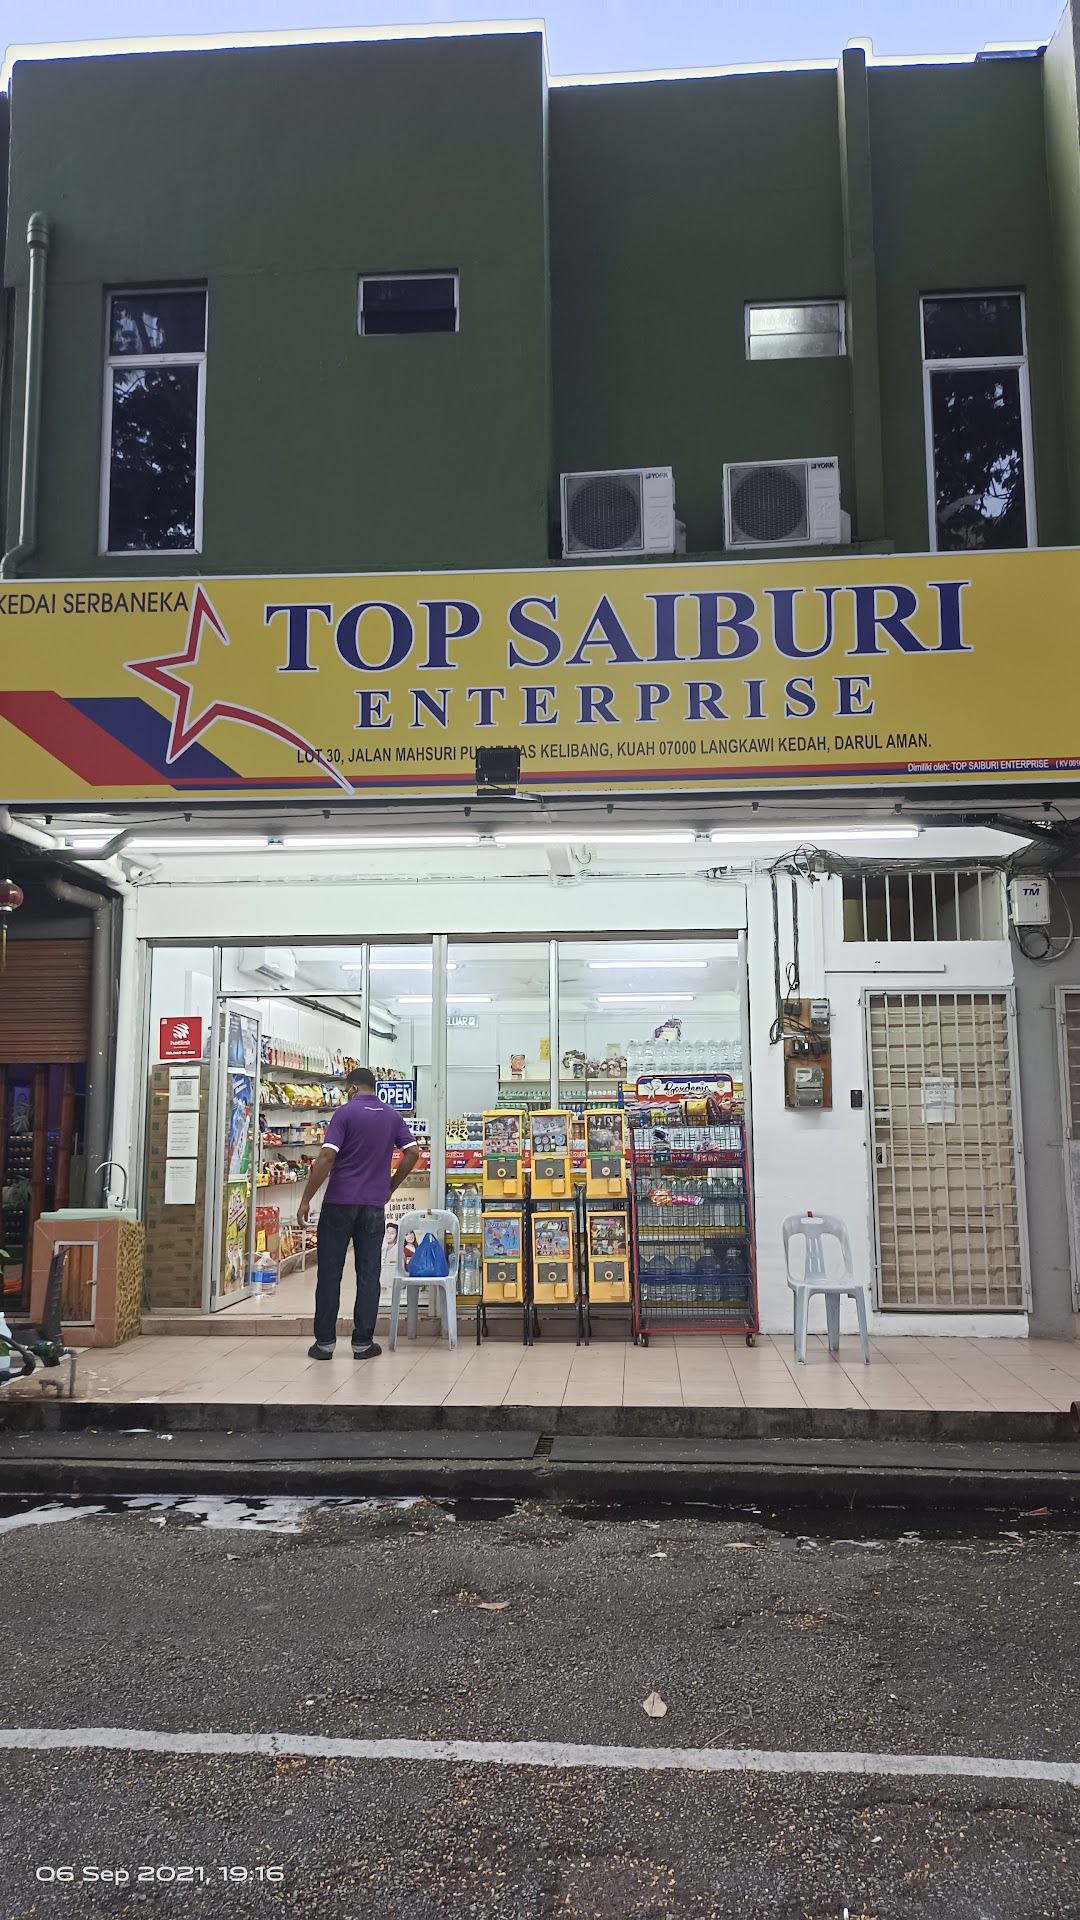 Top Saiburi Enterprise